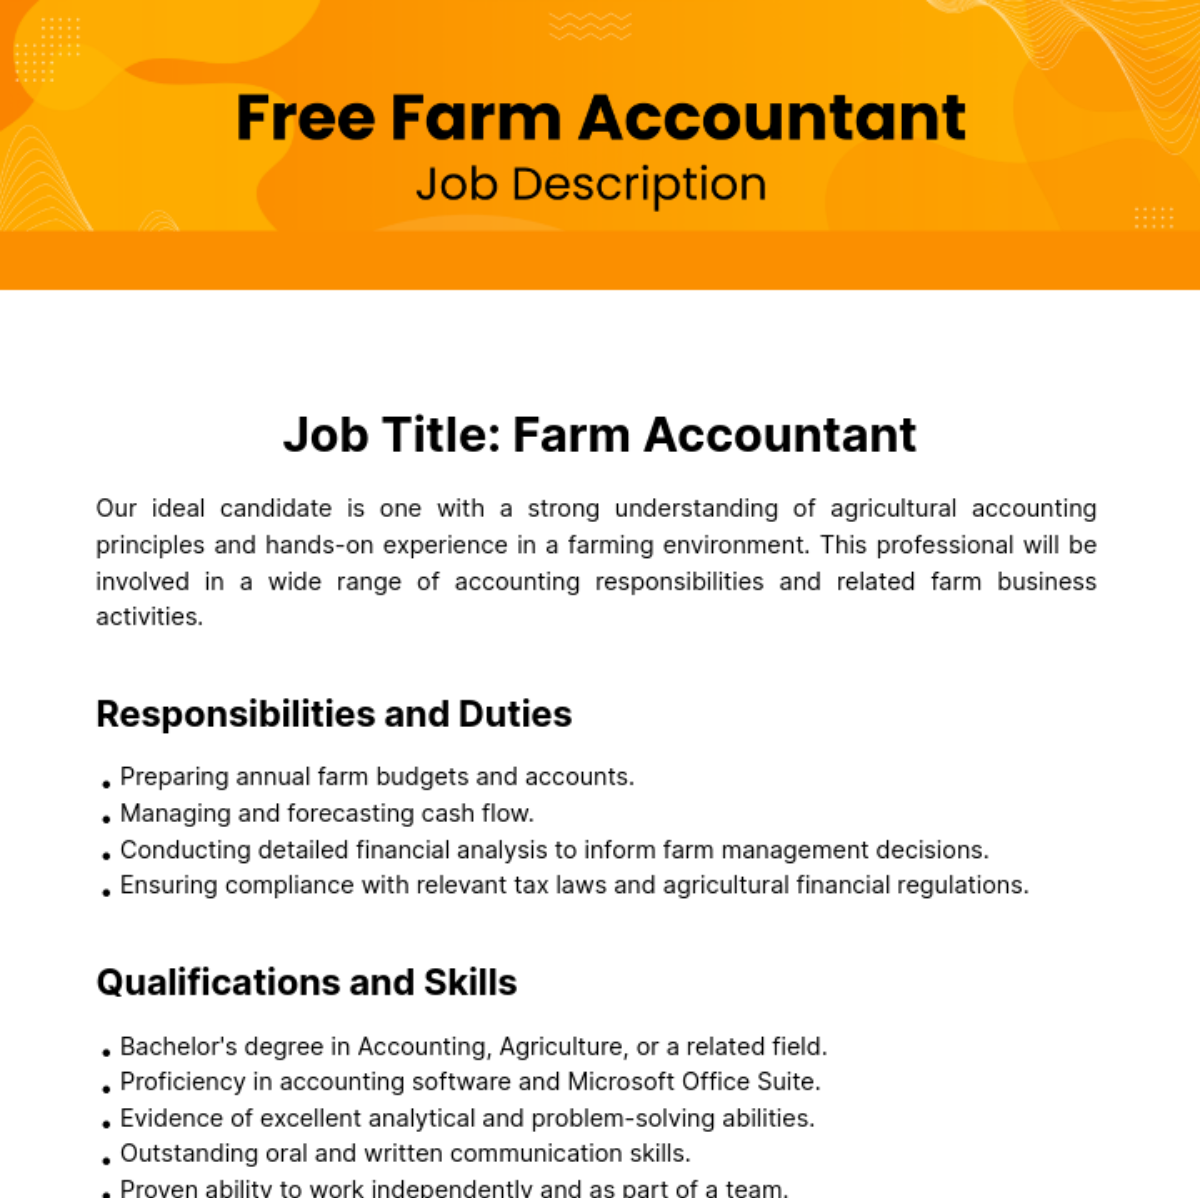 Farm Accountant Job Description Template